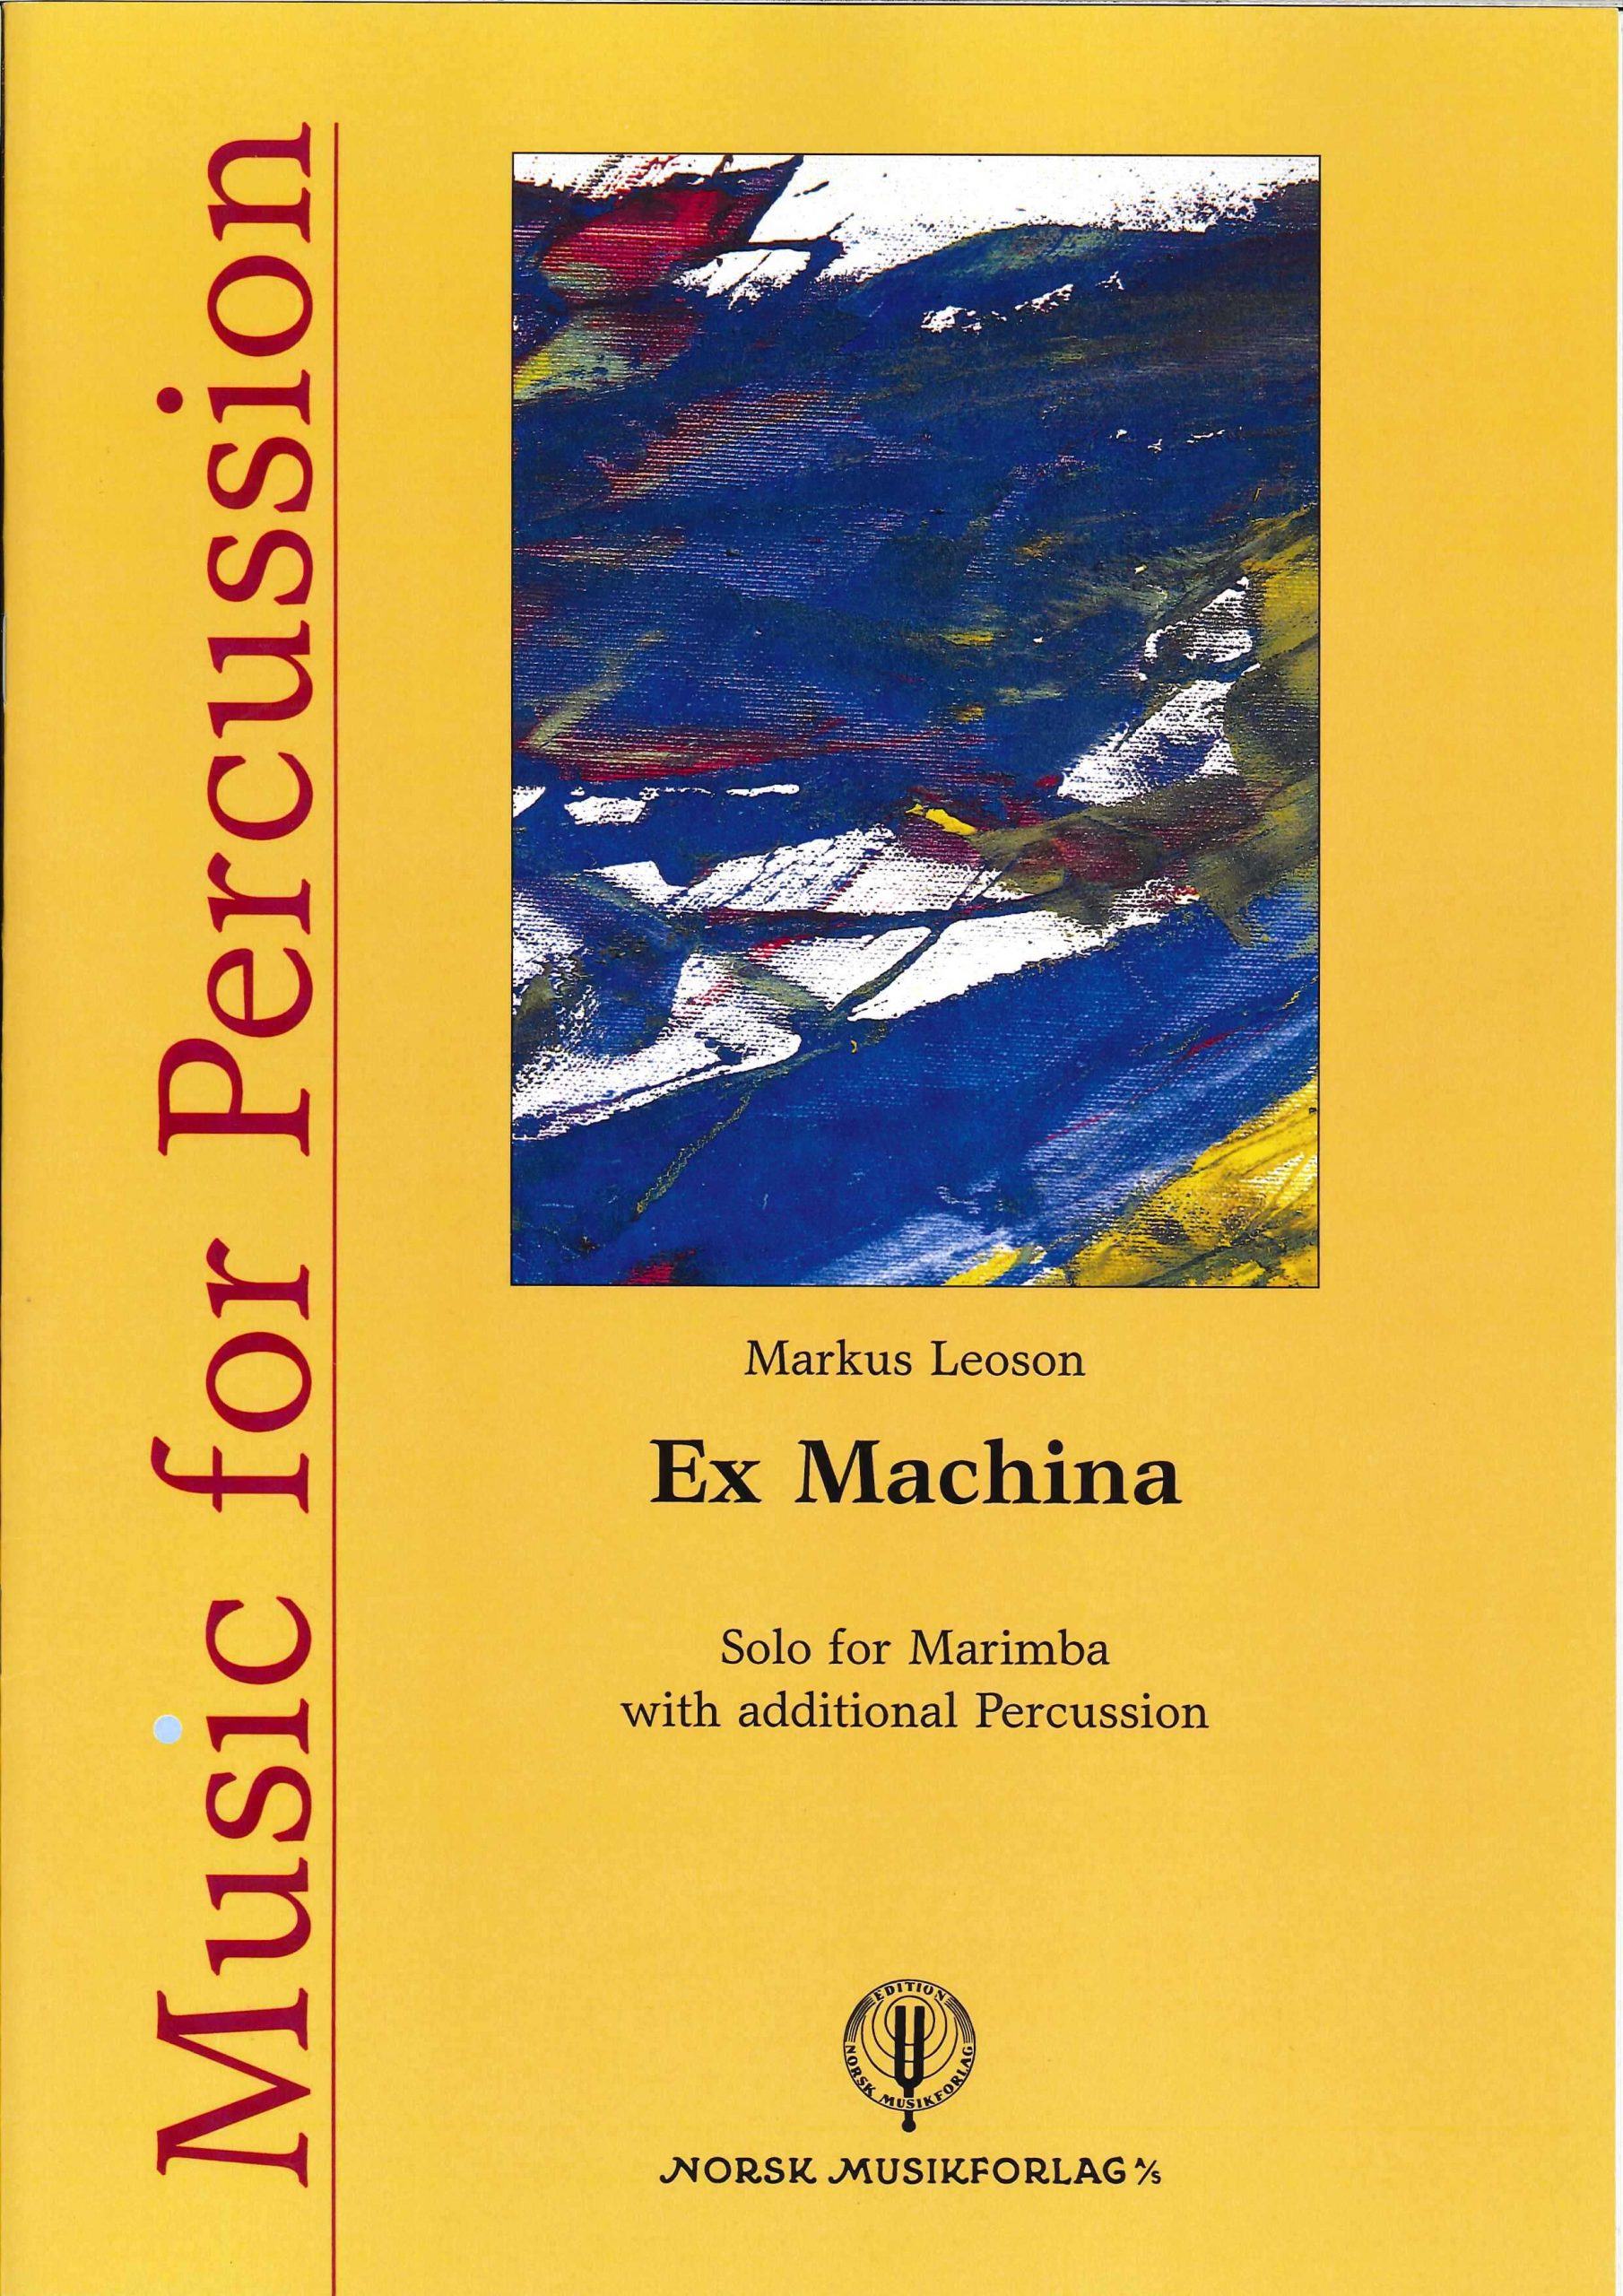 Ex Machina by Markus Leoson